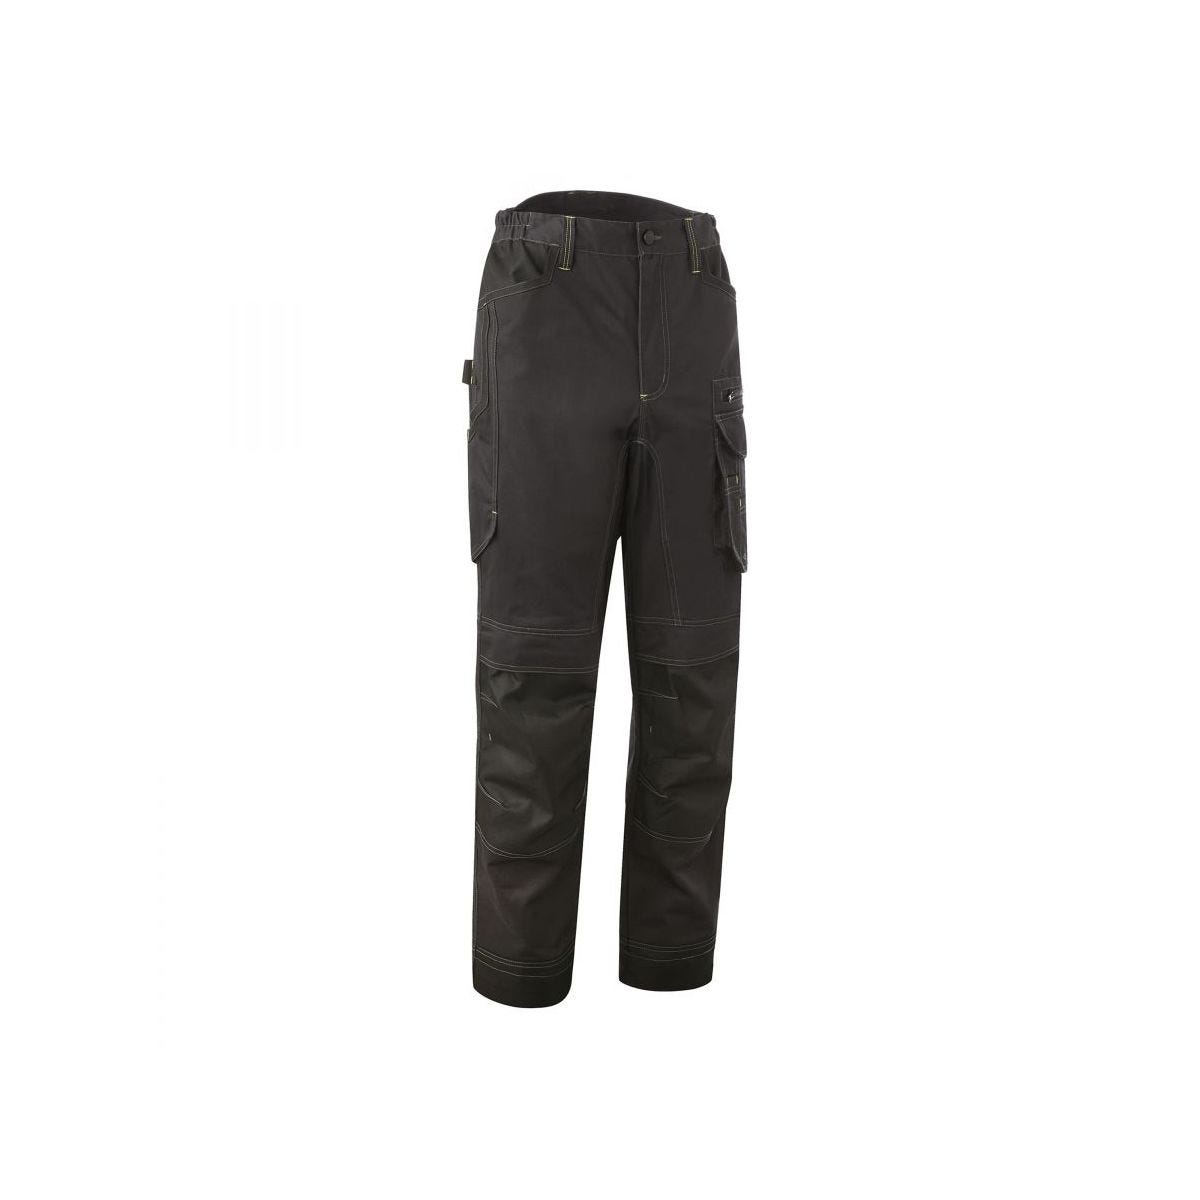 Pantalon BARVA Anthracite-Lime - Coverguard - Taille L 0